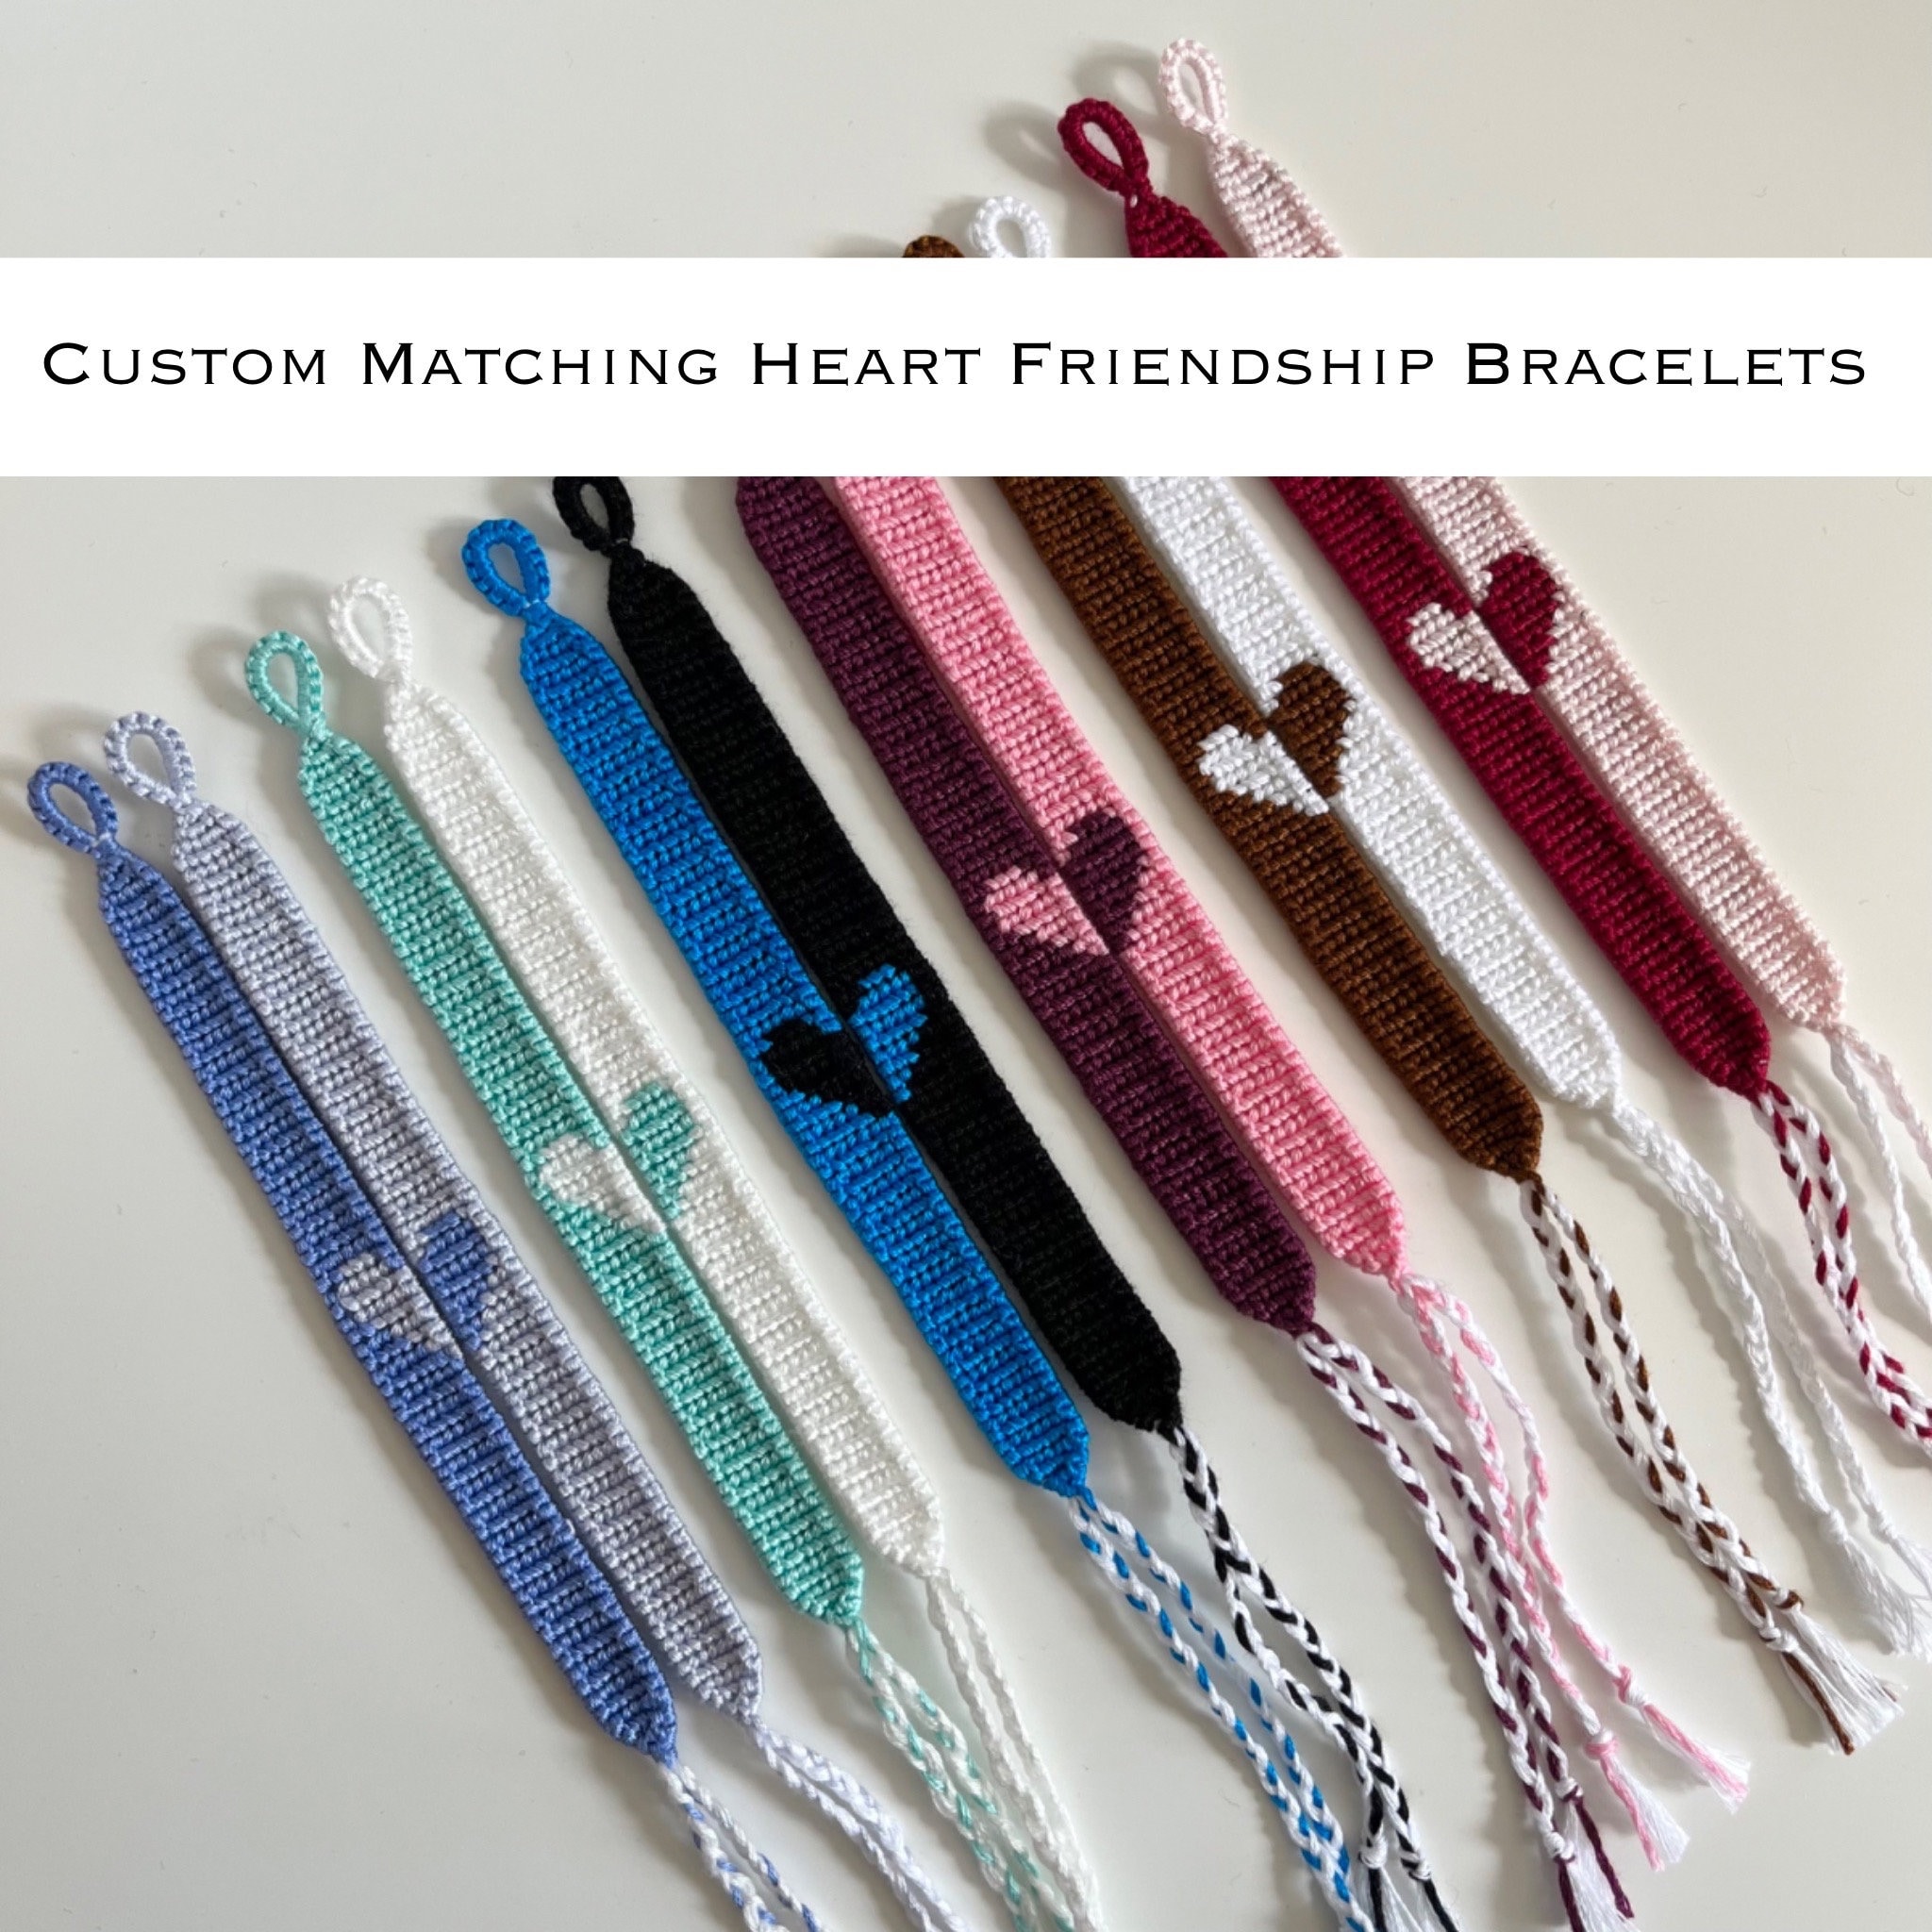 Tiny Heart Charm String Bracelet, Friendship Bracelet, Adjustable